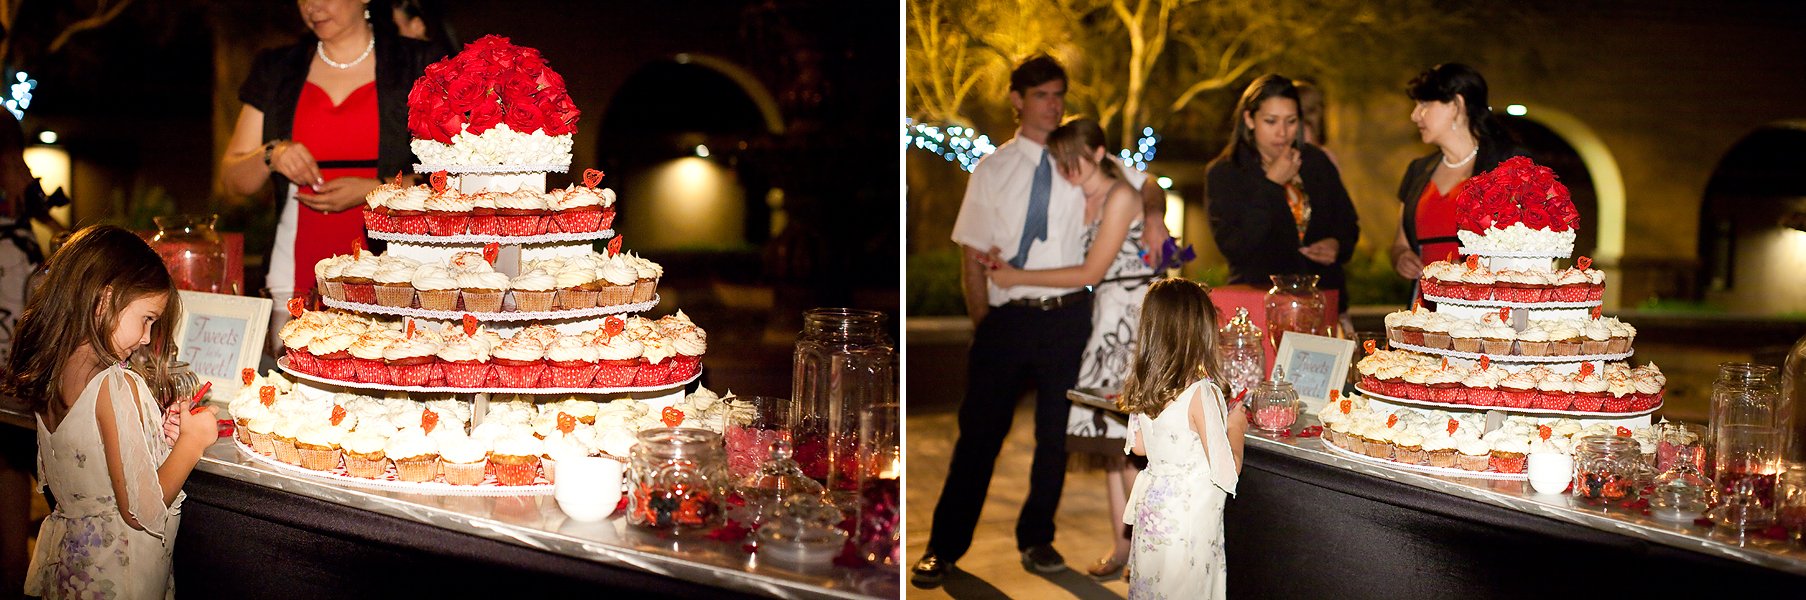 Red-Velvet-Cupcake-Cake-at-Jessica-and-Stan's-Wedding-in-Scottsdale-Arizona.jpg